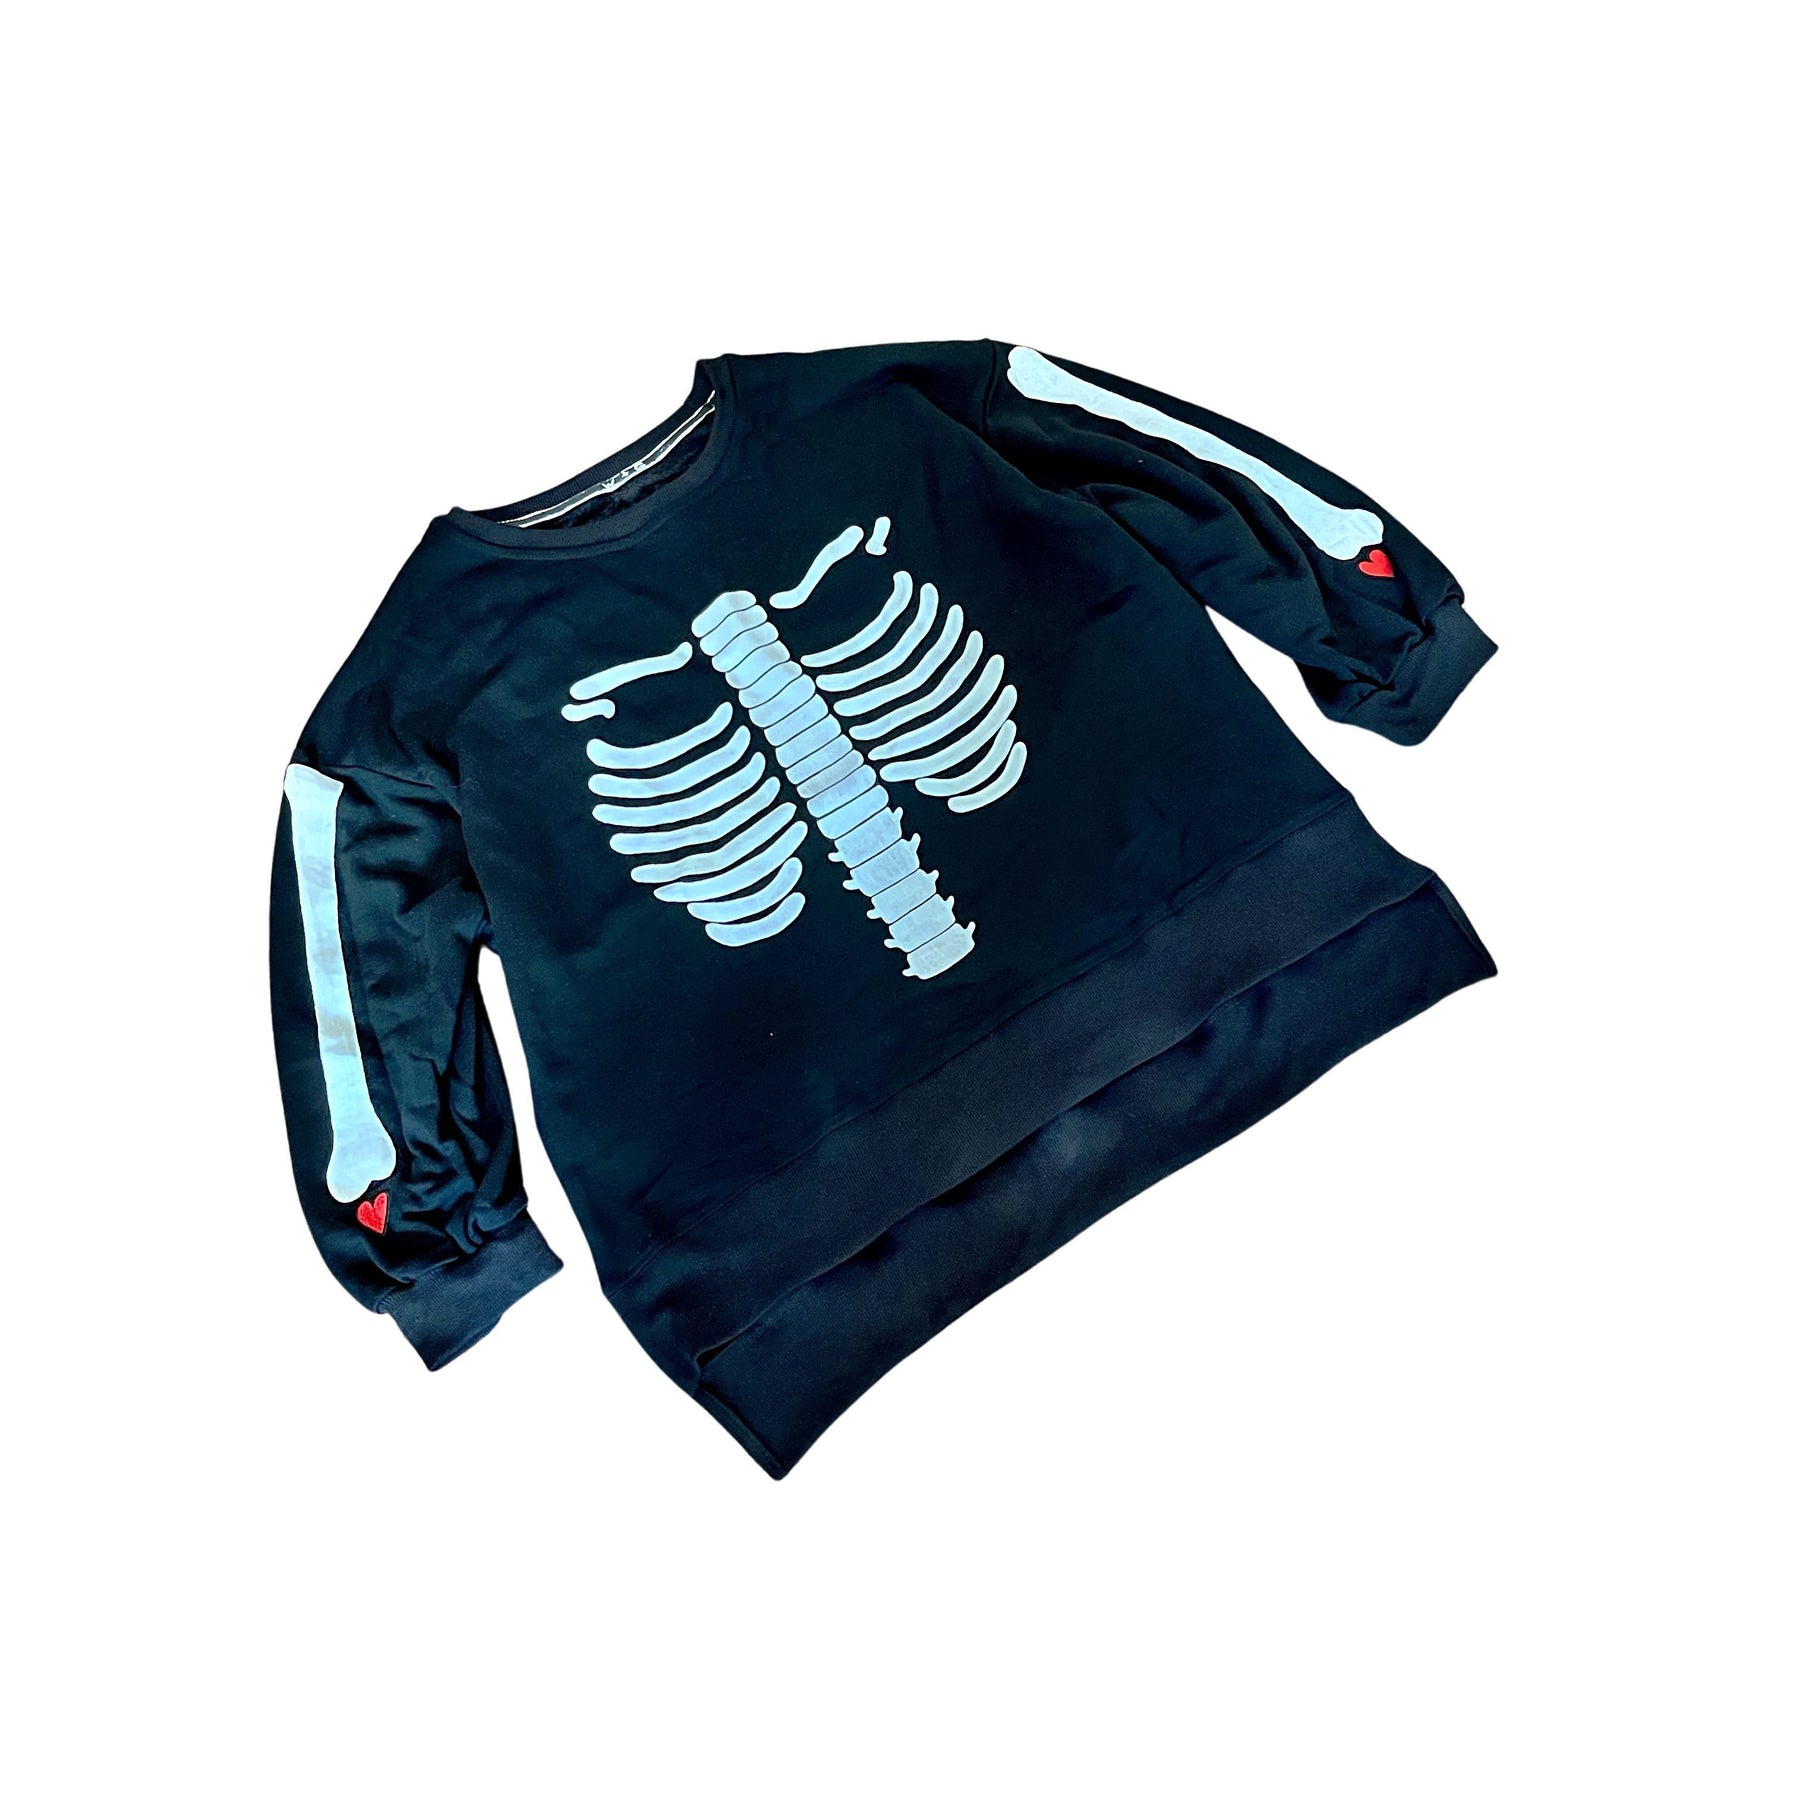 'Im A Skeleton" Painted Sweatshirt